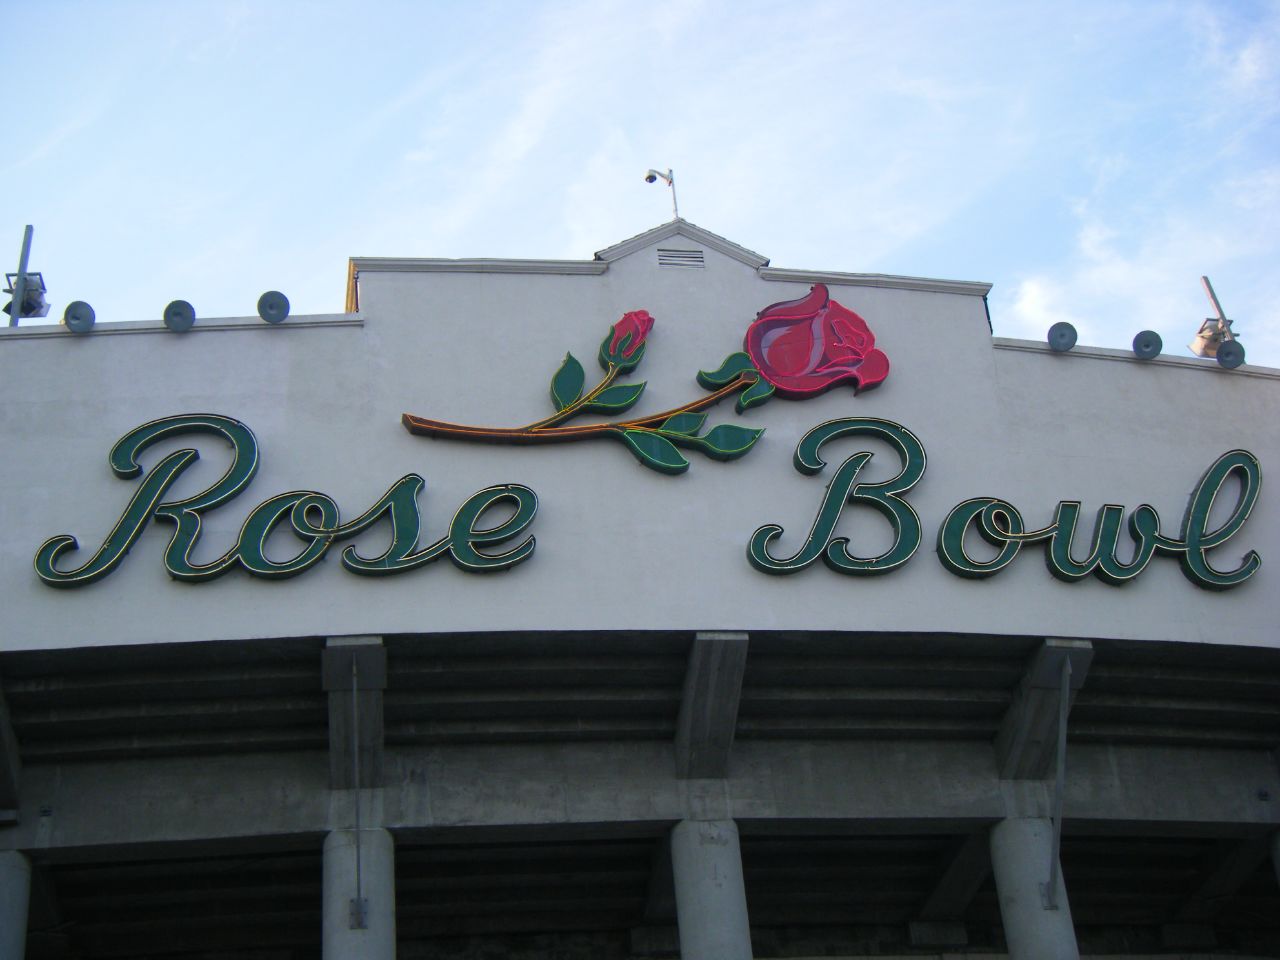 rose bowl bus pasadena tournament of roses bus